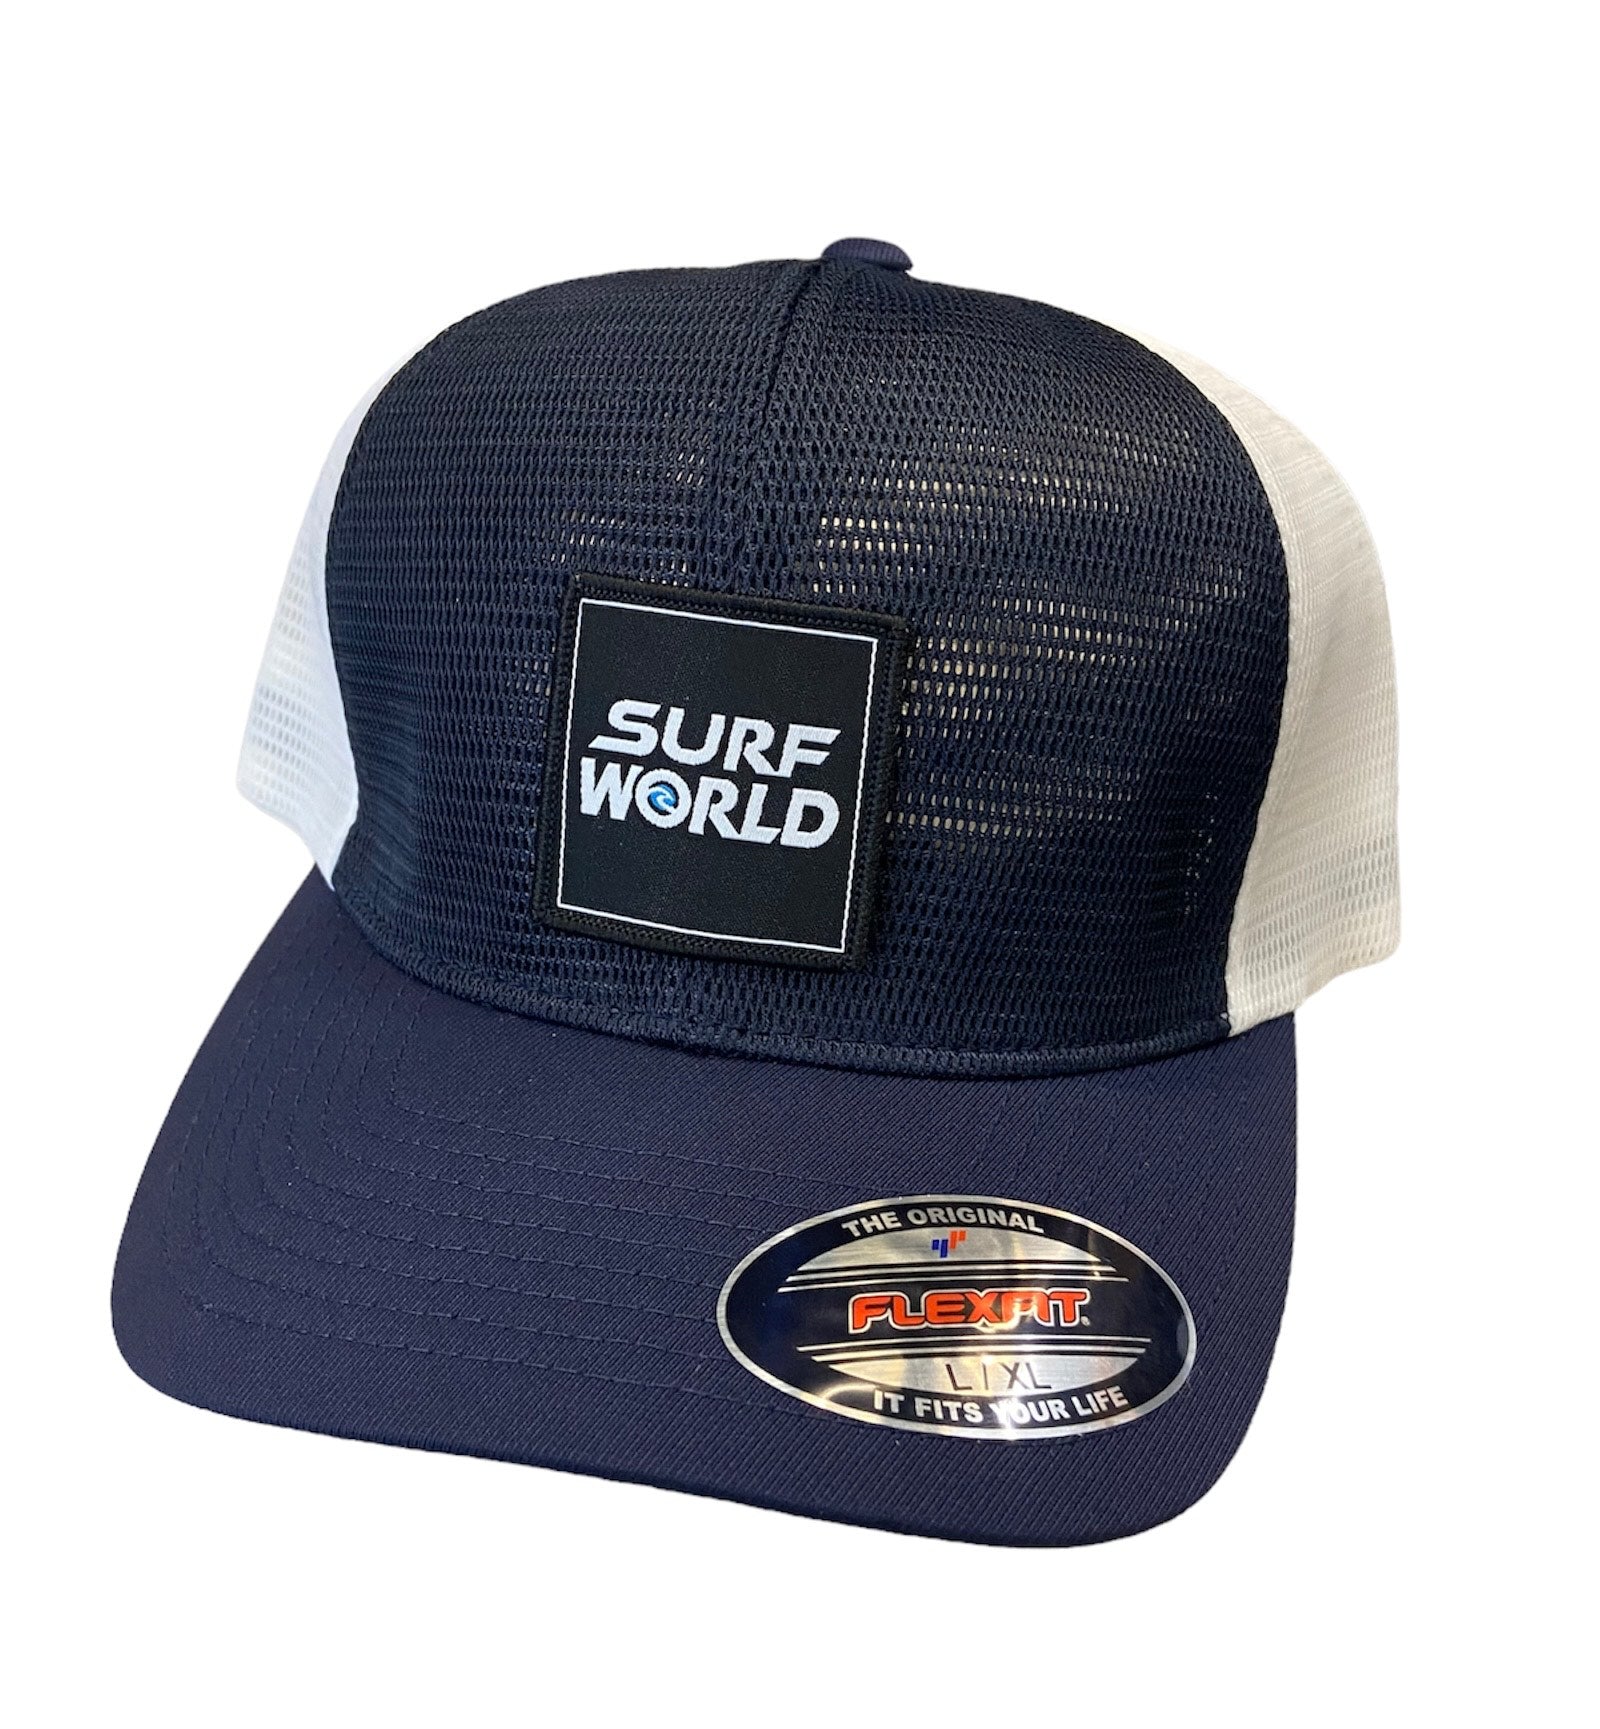 Surf World All Mesh Trucker Hat Hats Navy White Box L/XL